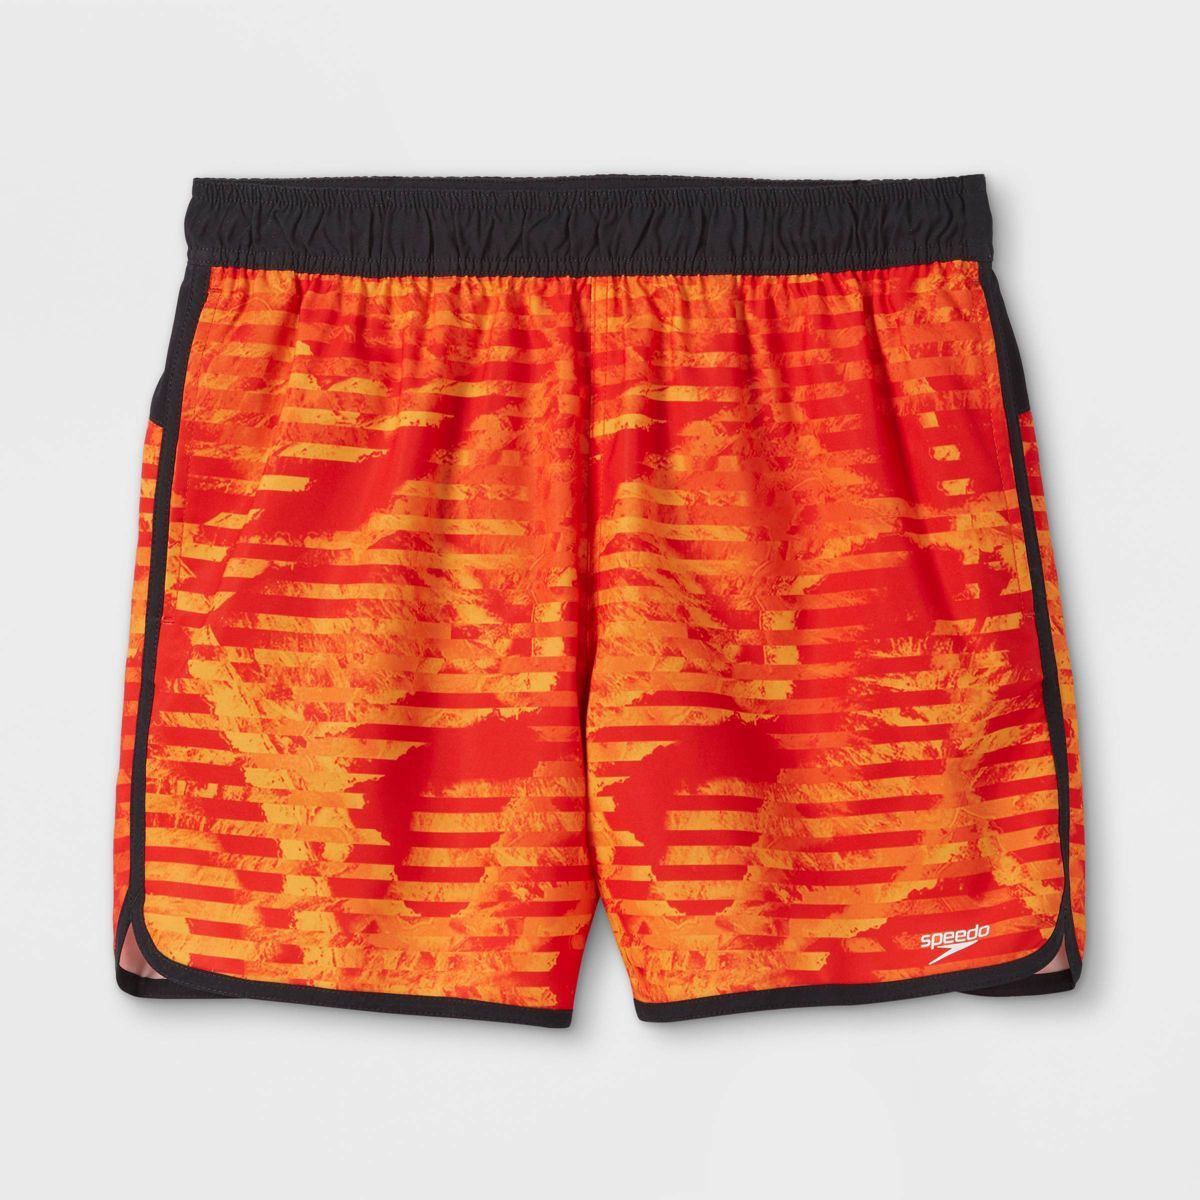 Speedo Men's 5.5" Spicy Print Swim Trunks - Orange | Target